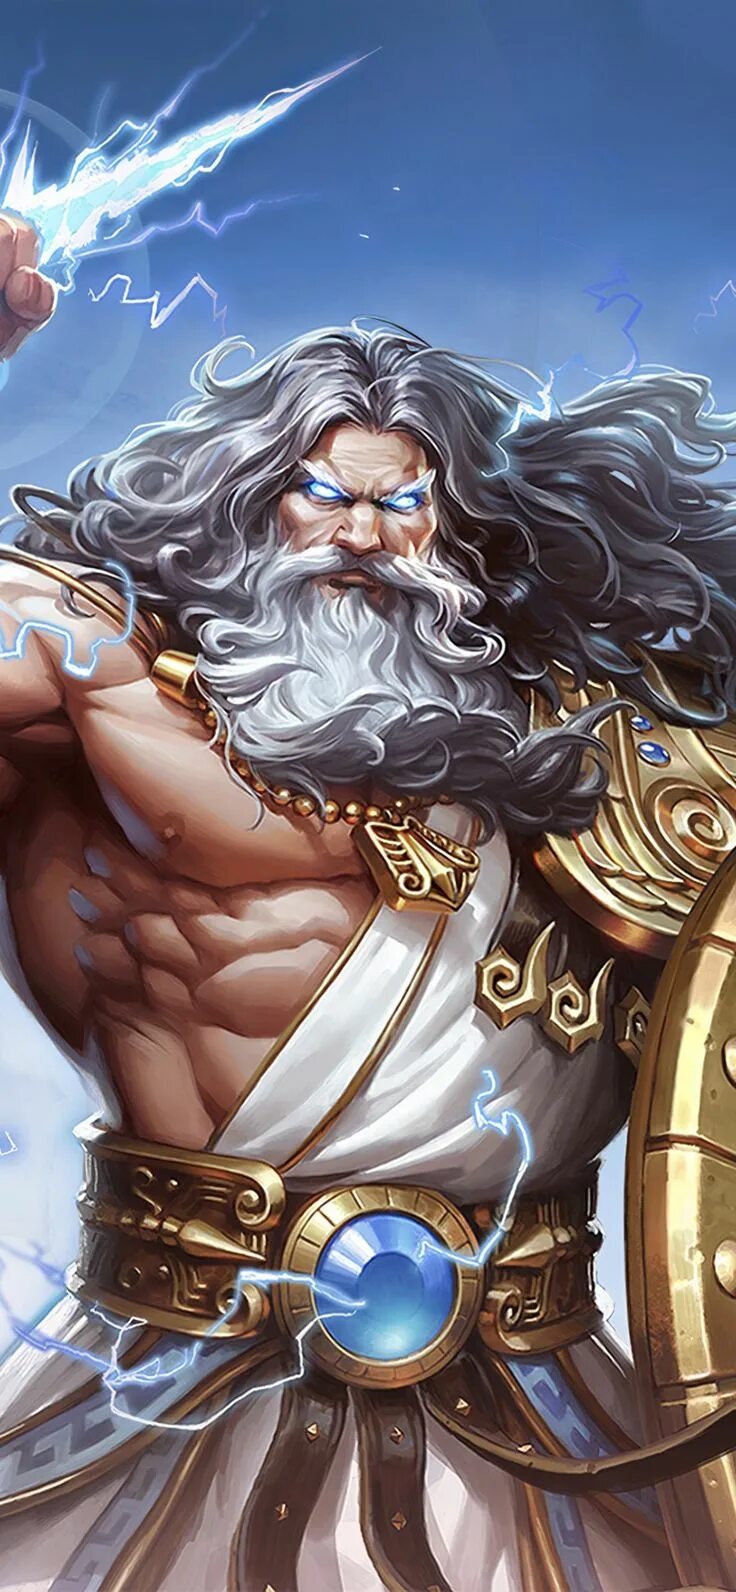 Zeus Master of Olympus 2019. Зевс Смайт. Боги мифологии. Цифровой Бог. Zeus master